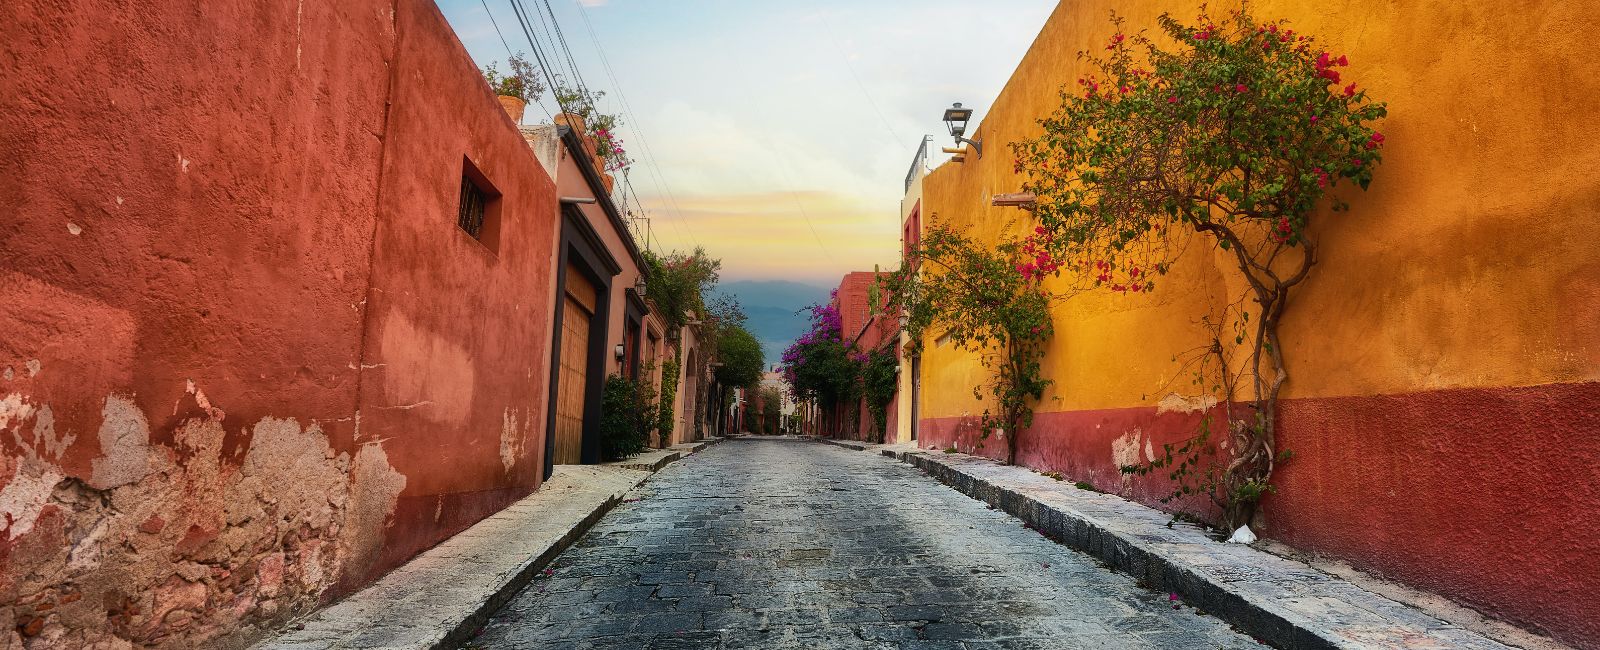 Bright orange and red buildings in a laneway in San Miguel de Allende